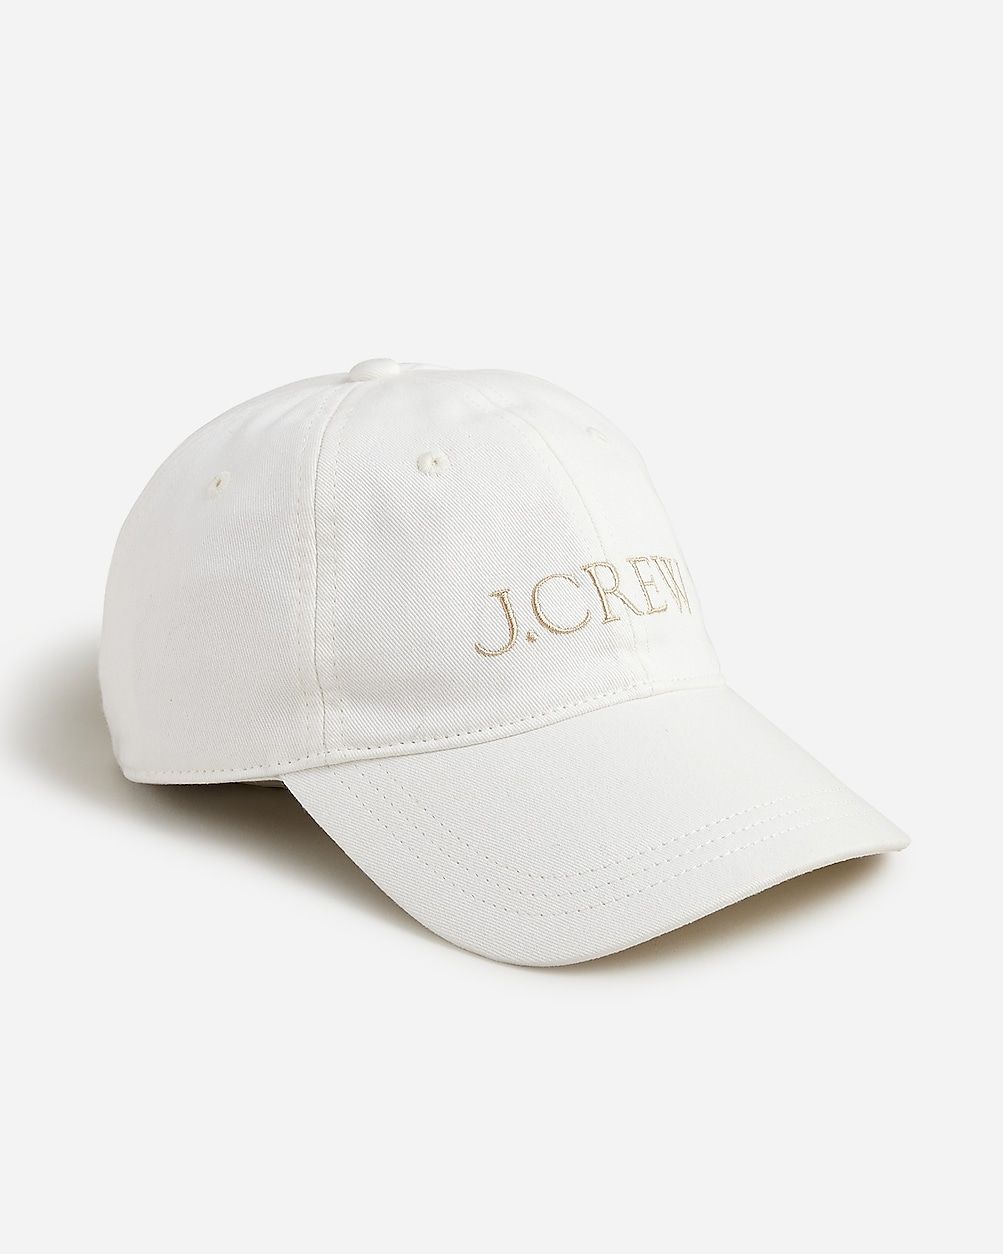 J.Crew&trade; baseball hat | J.Crew US